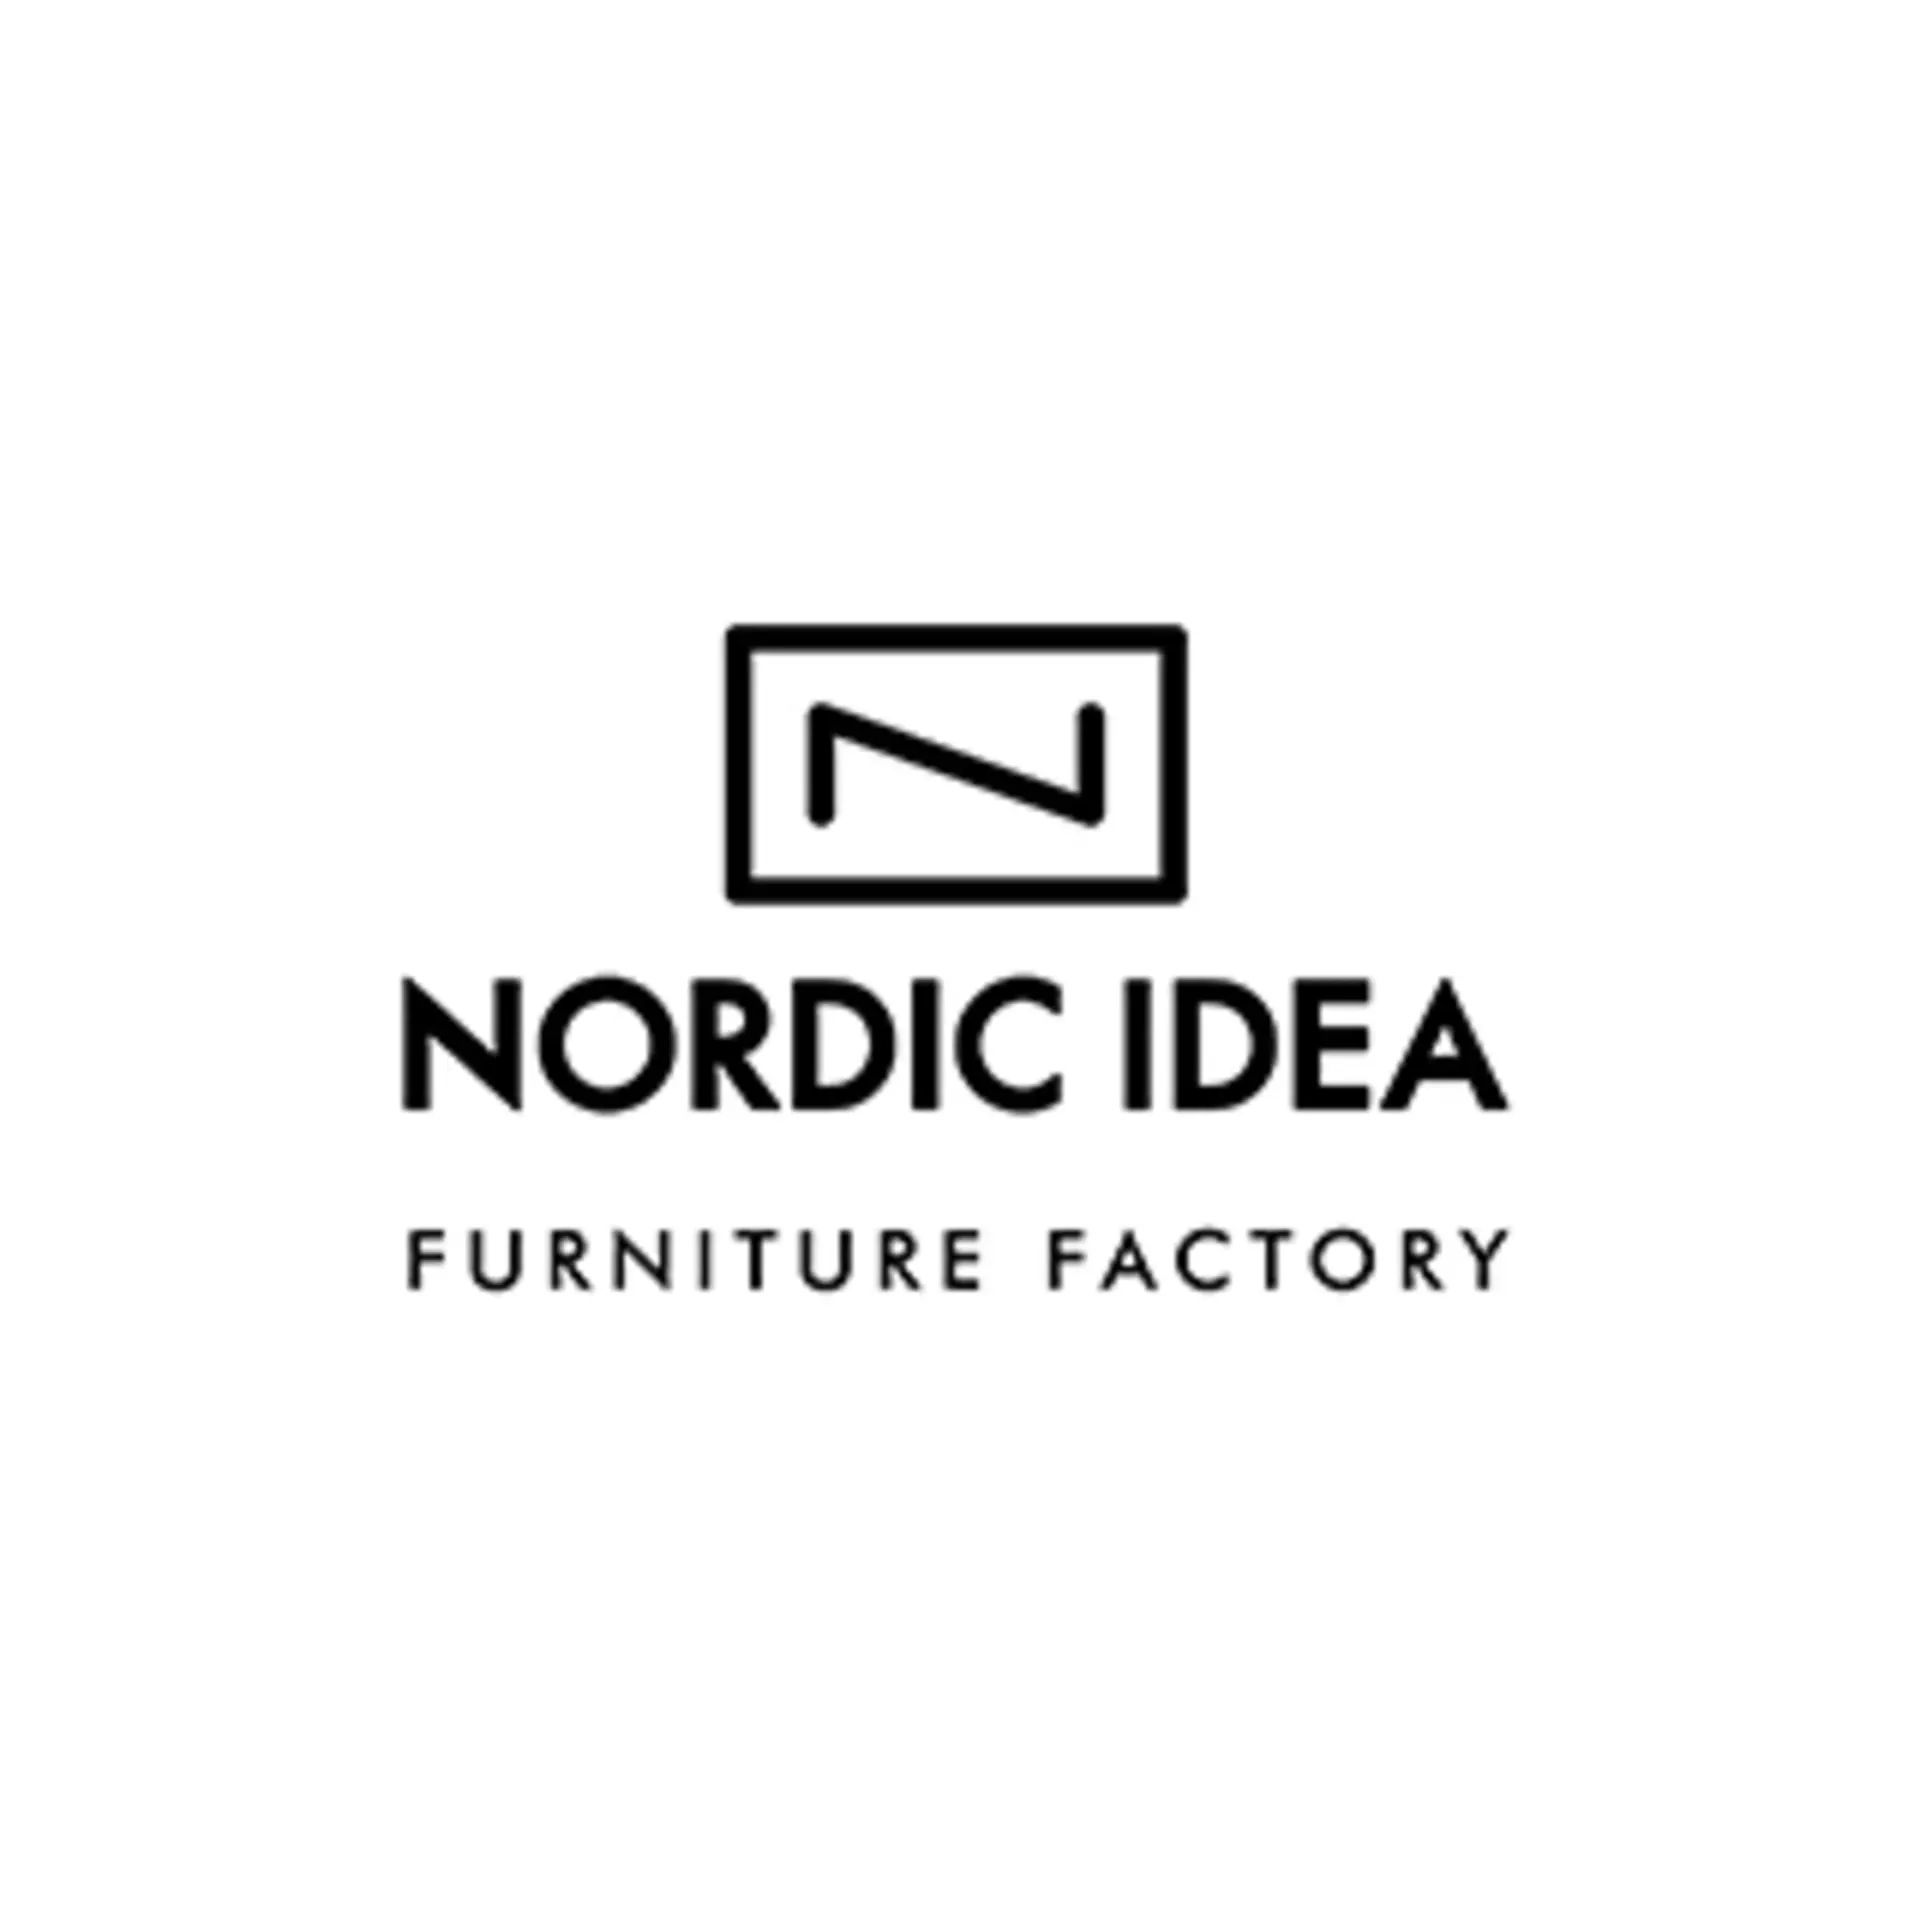 Logo "NORDIC IDEA - Furniture Factory"